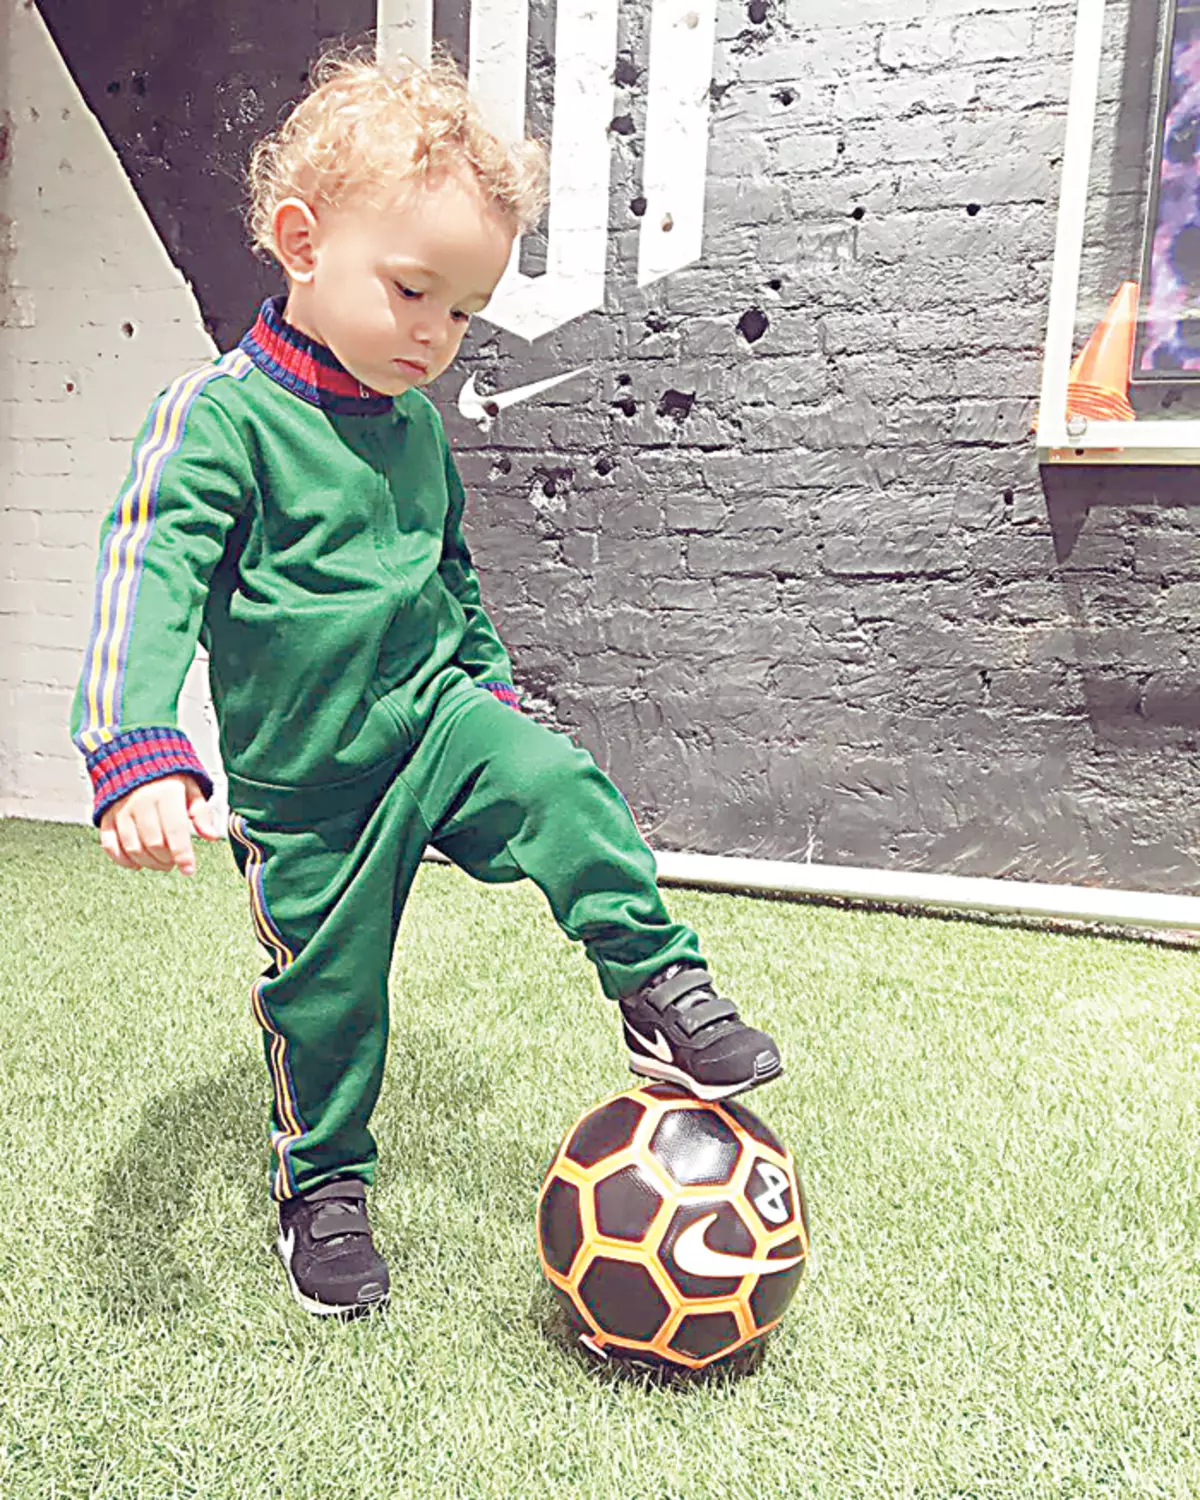 Najmlađi član obitelji Zhirkov - sin Daniela - bez dana ne može živjeti bez nogometne utakmice